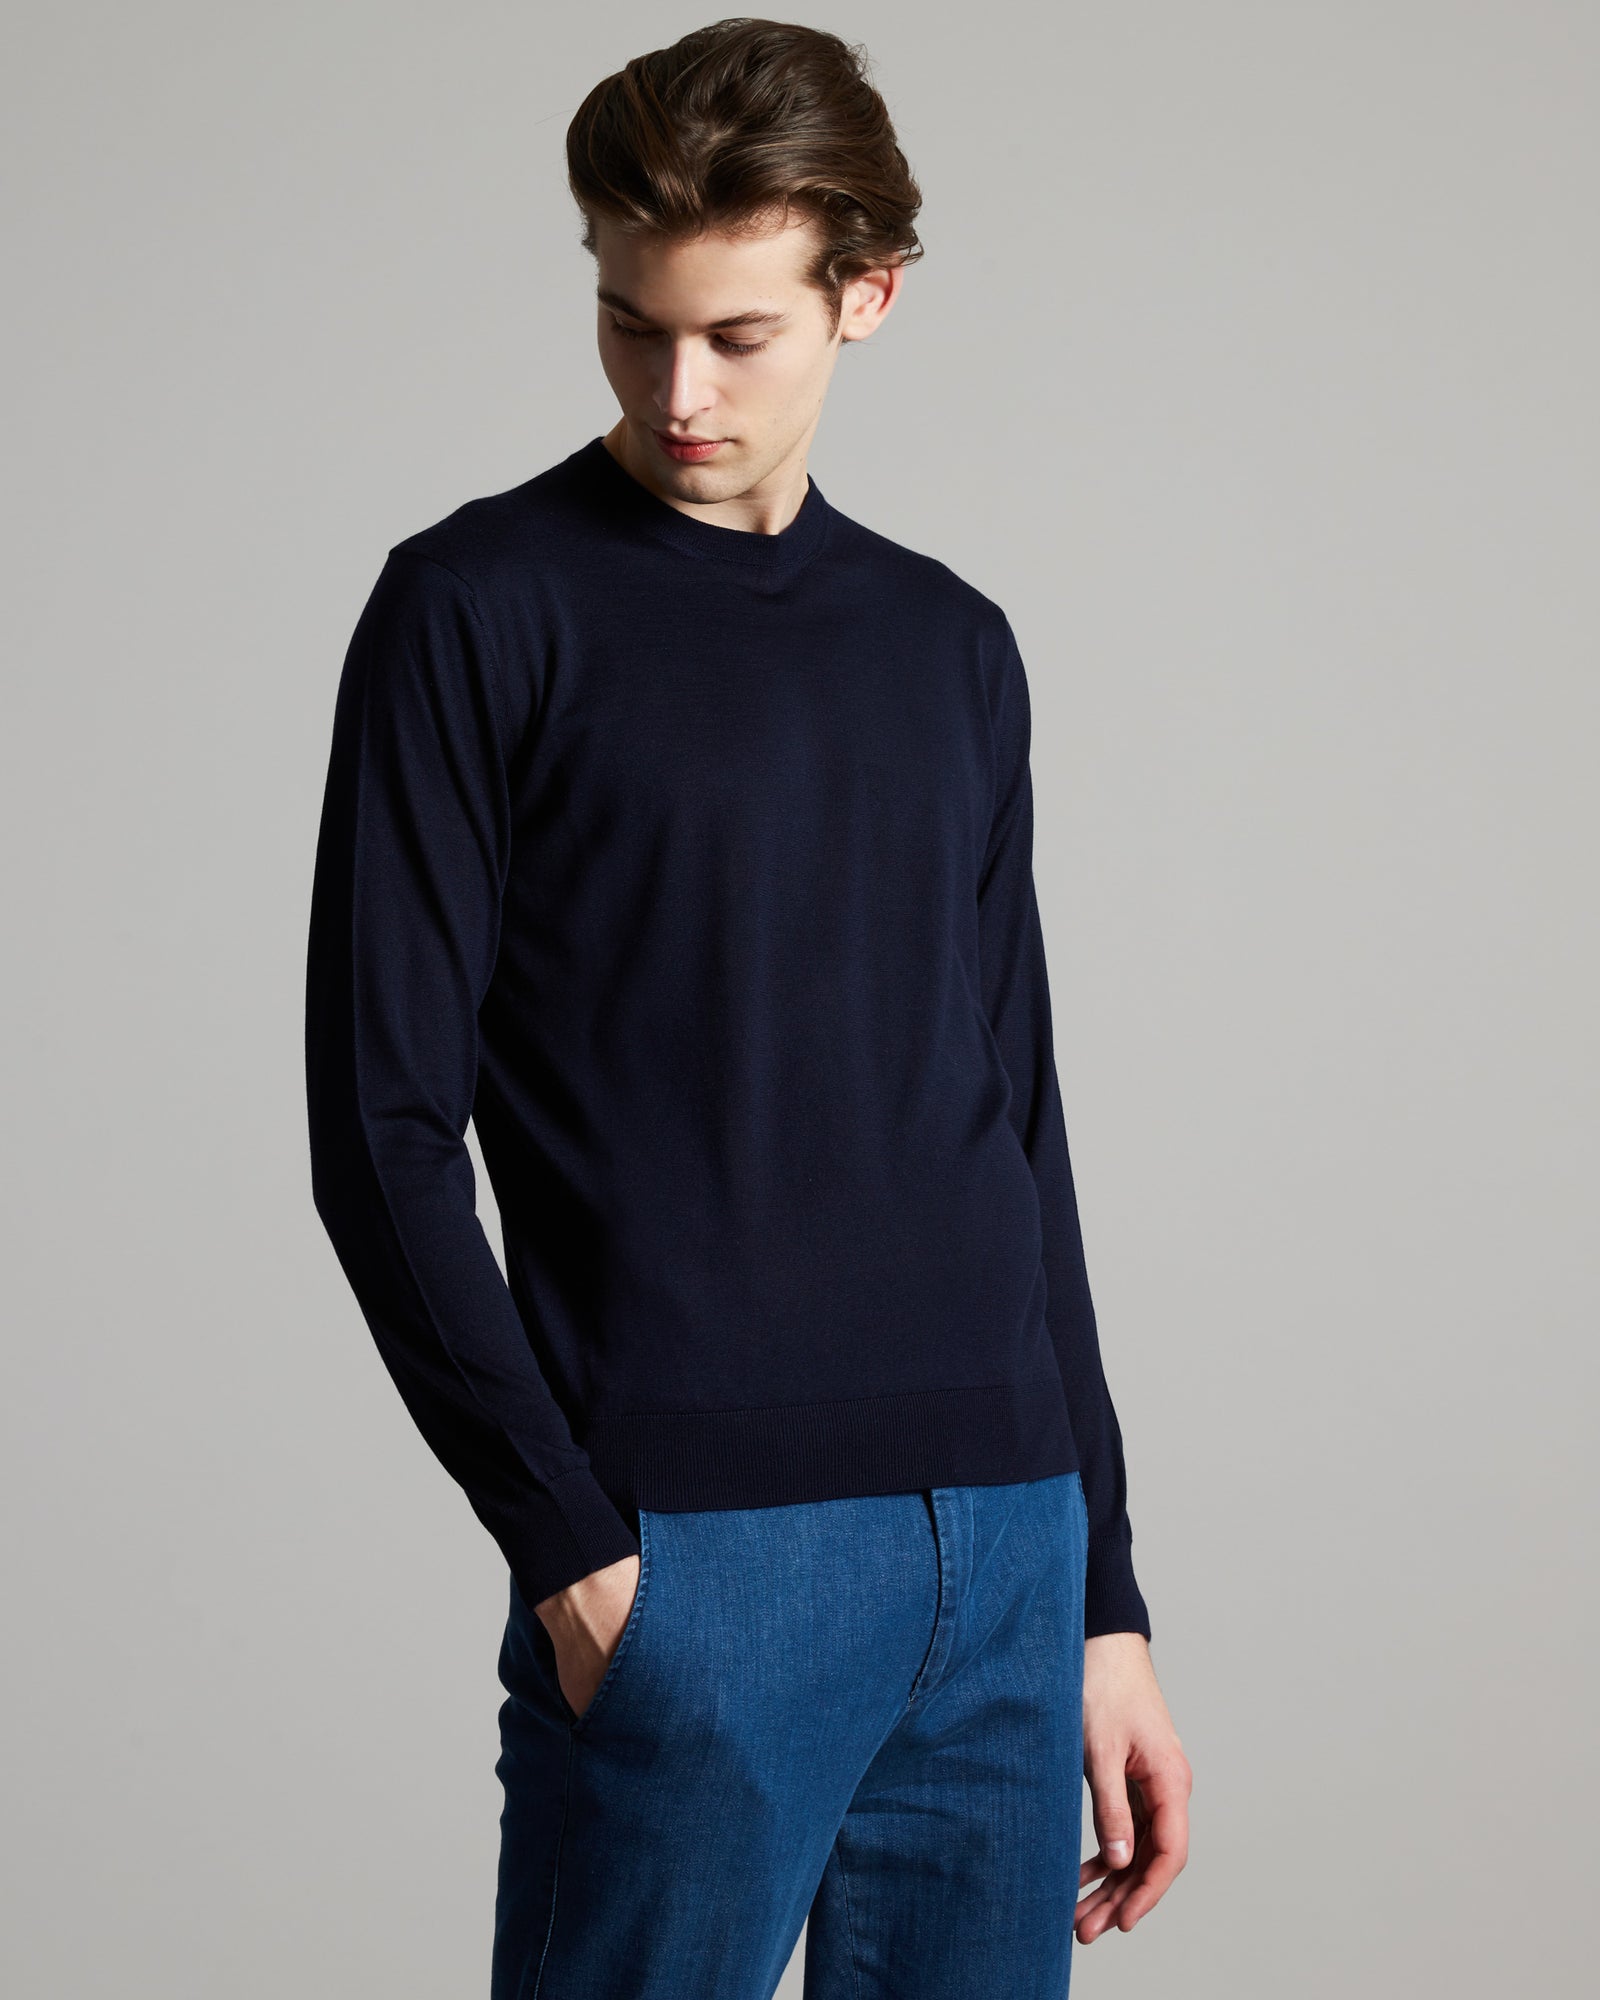 Blue cashmere and silk men's round-neck sweater